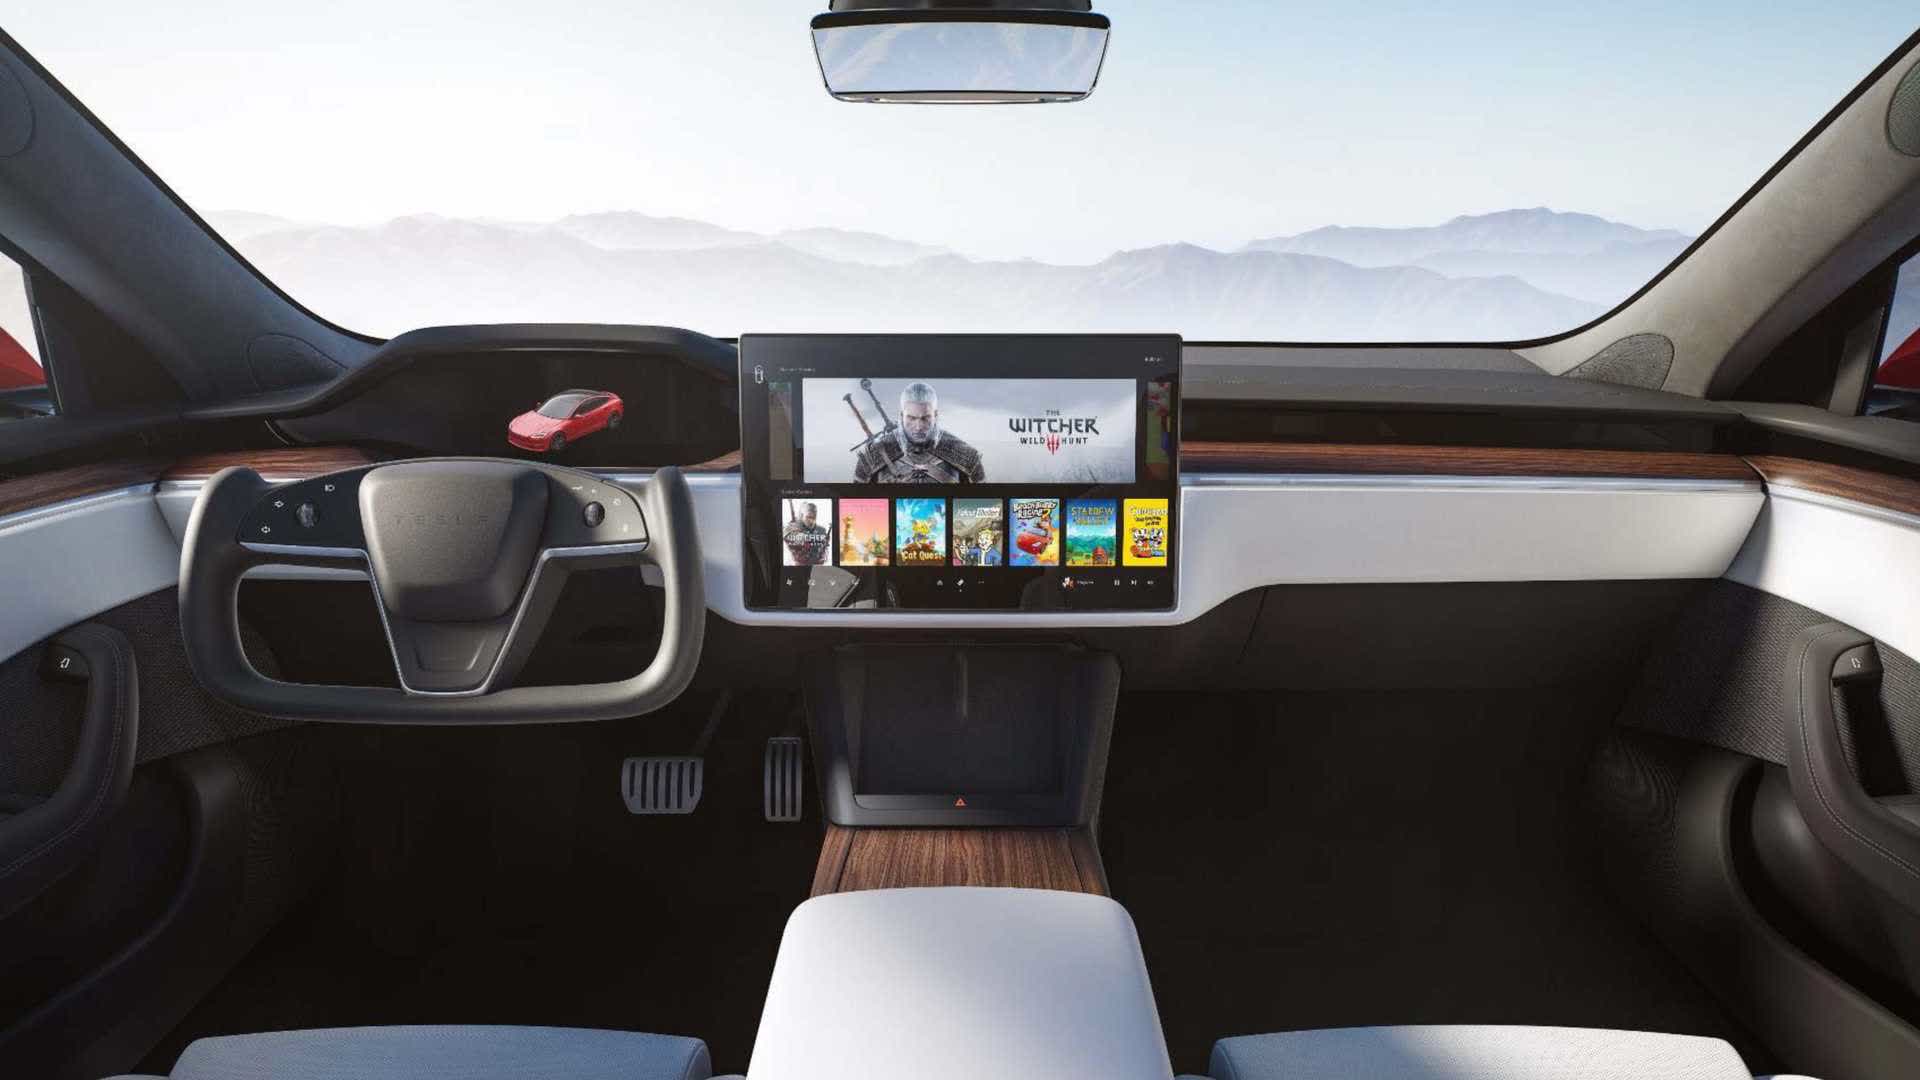 Tesla's new steering yoke looks futuristic but lacks practicality